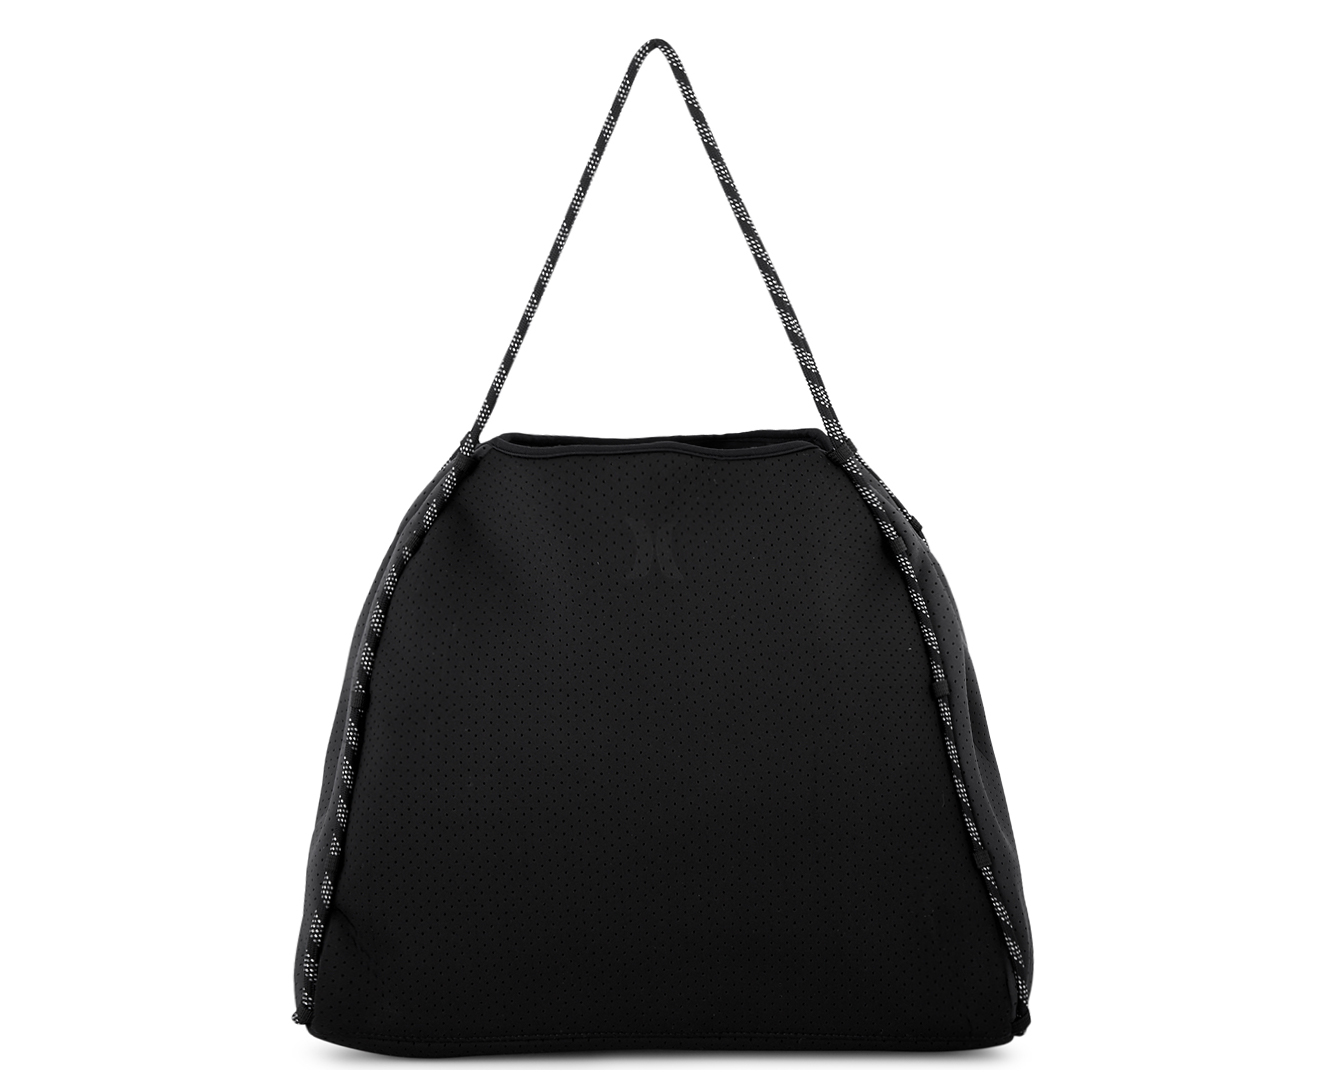 Hurley Neoprene Tote Bag - Black/Grey | Catch.com.au